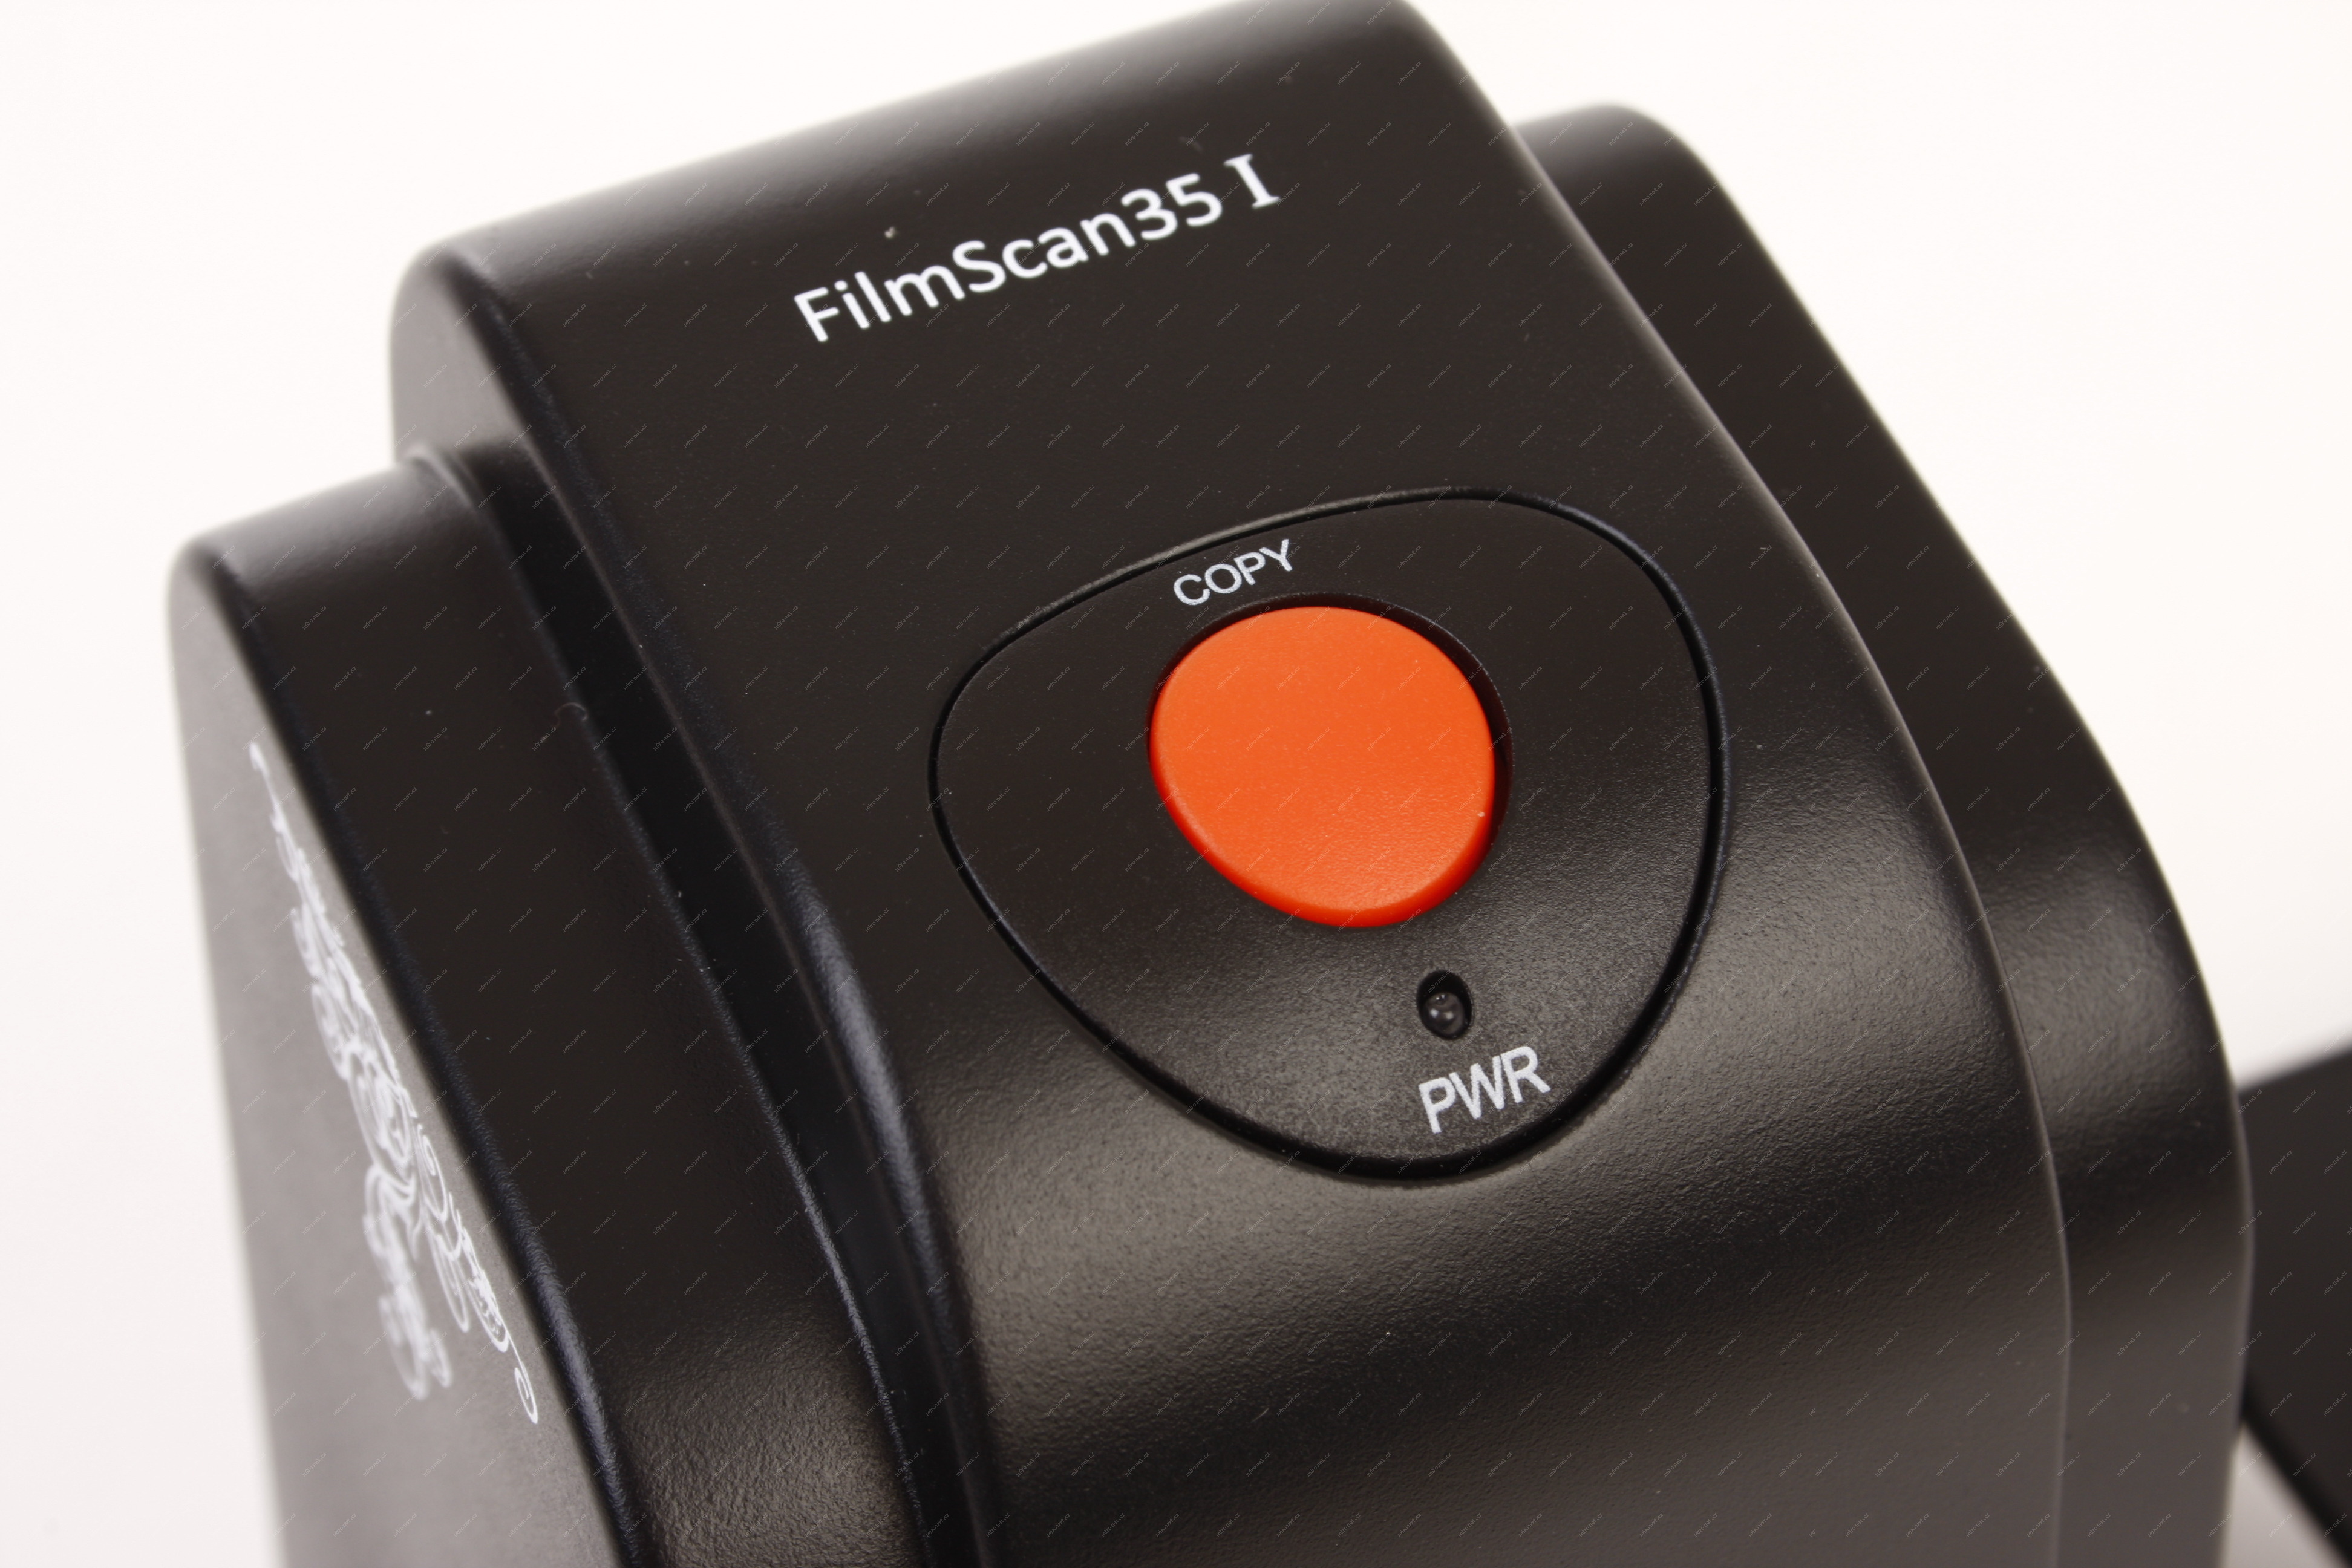 innovative technology filmscan 35 i software download